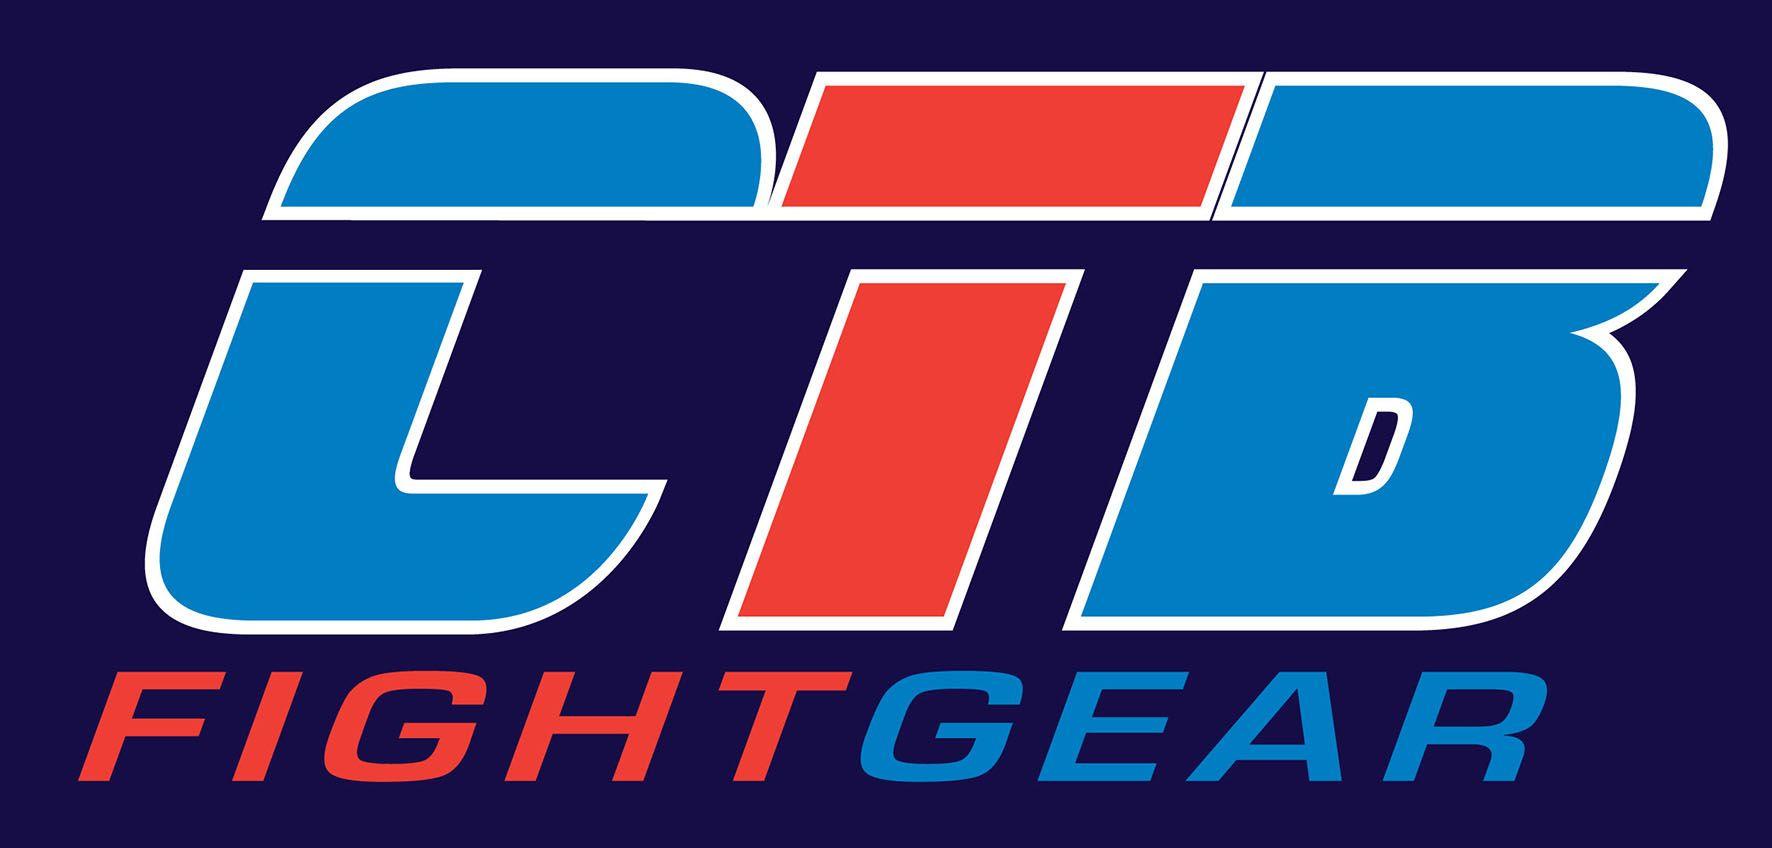 CTB Logo - artuscreative